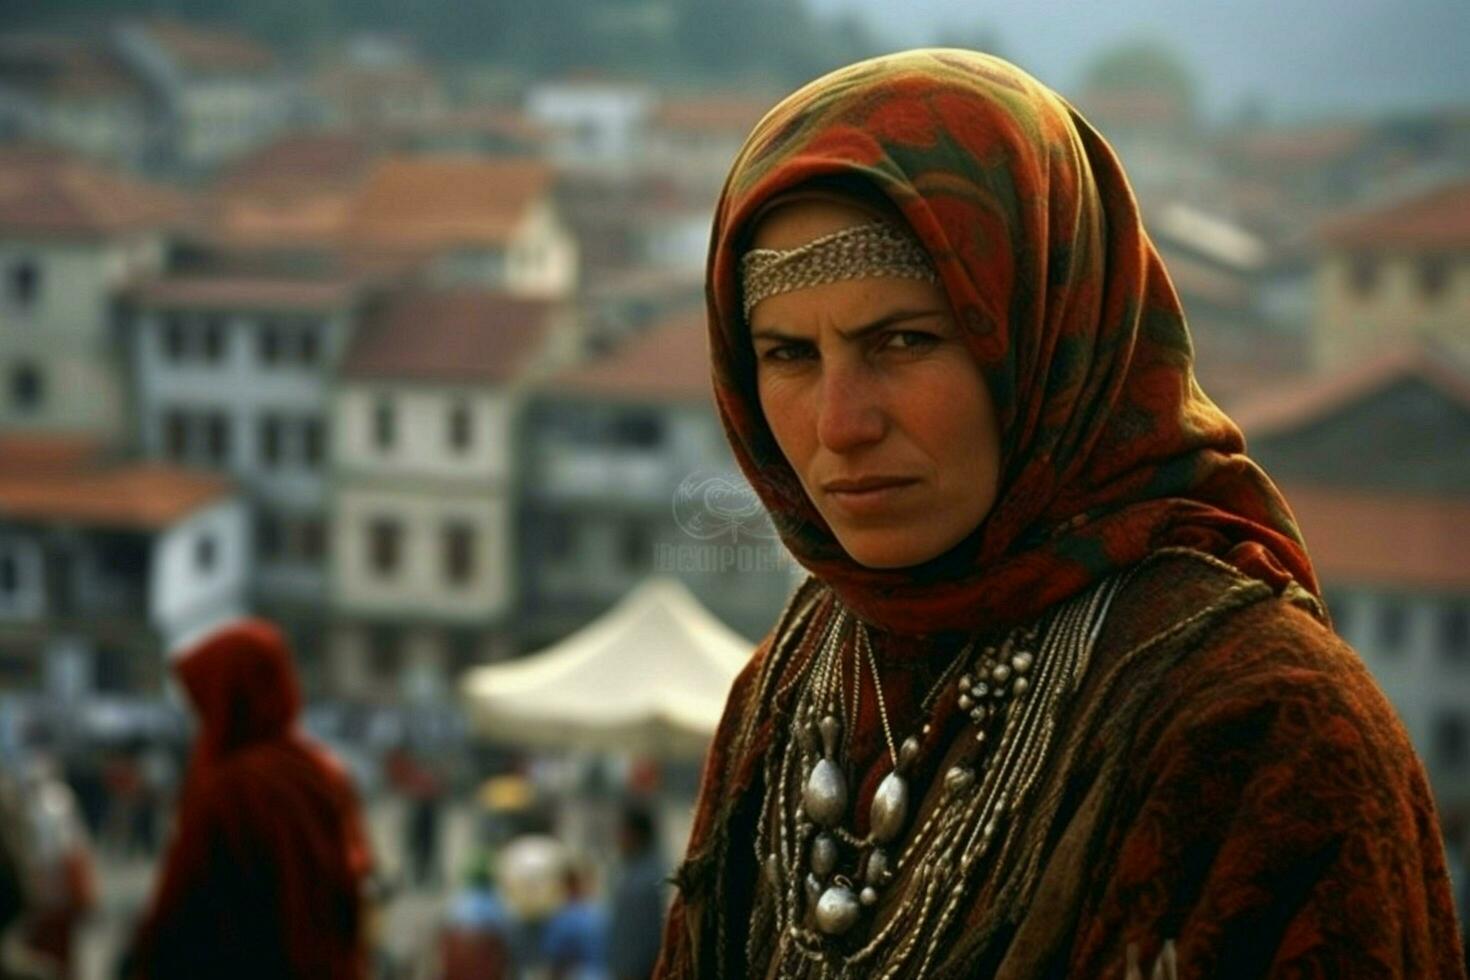 turco mujer turco ciudad foto